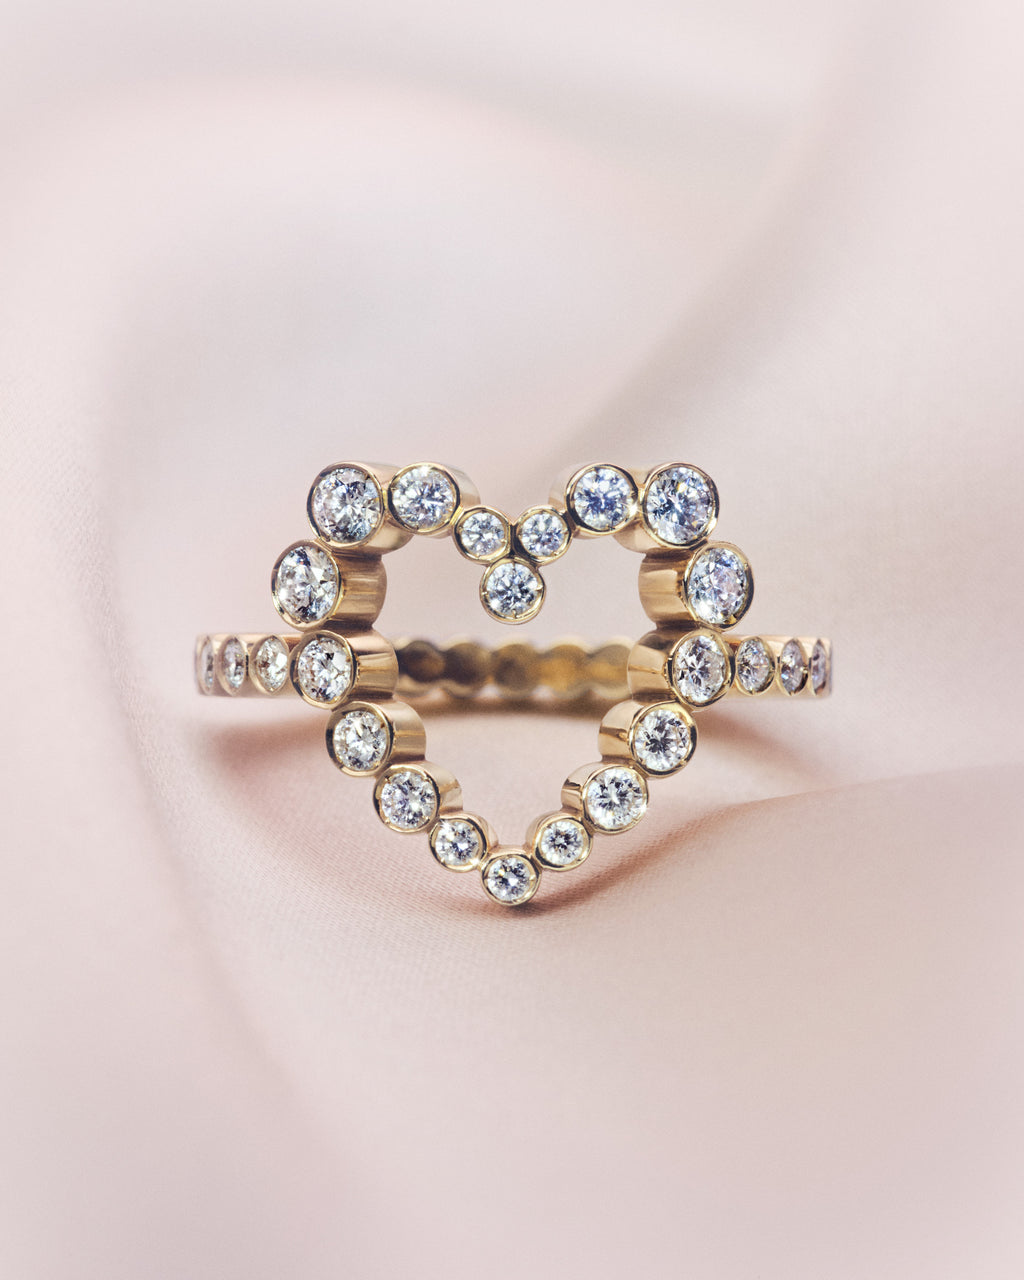 18K yellow gold diamond ring shaped as a heart.